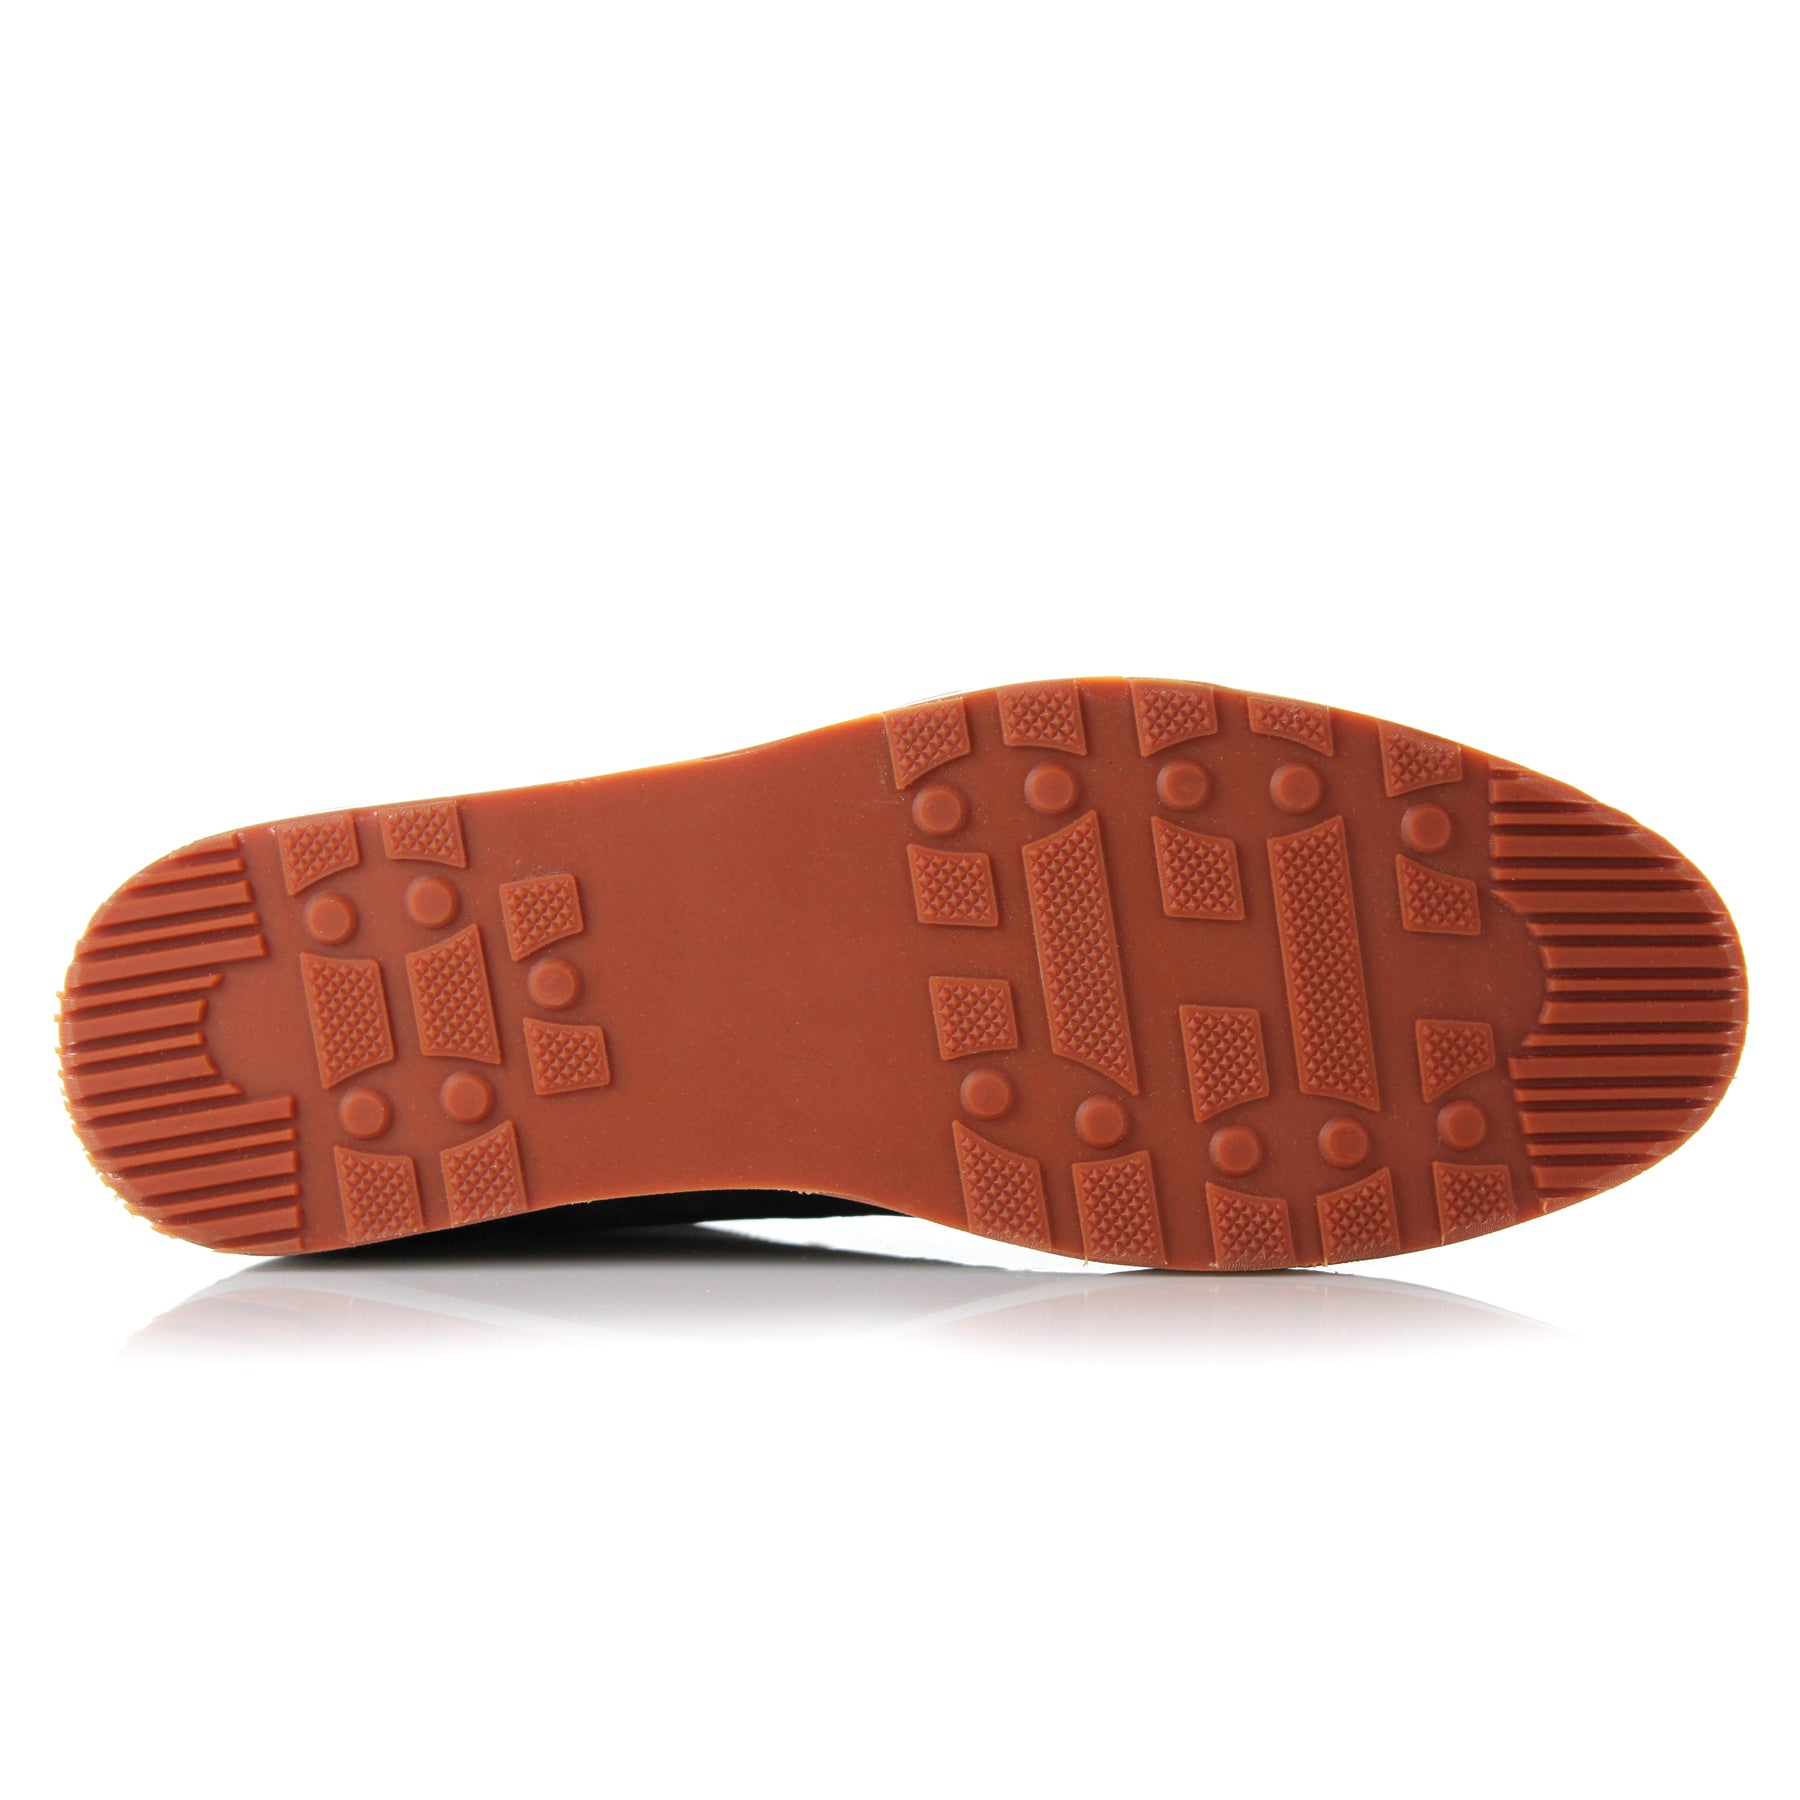 Cap-Toe Ankle Boot Sneakers | Birt by Ferro Aldo | Conal Footwear | Bottom Sole Angle View